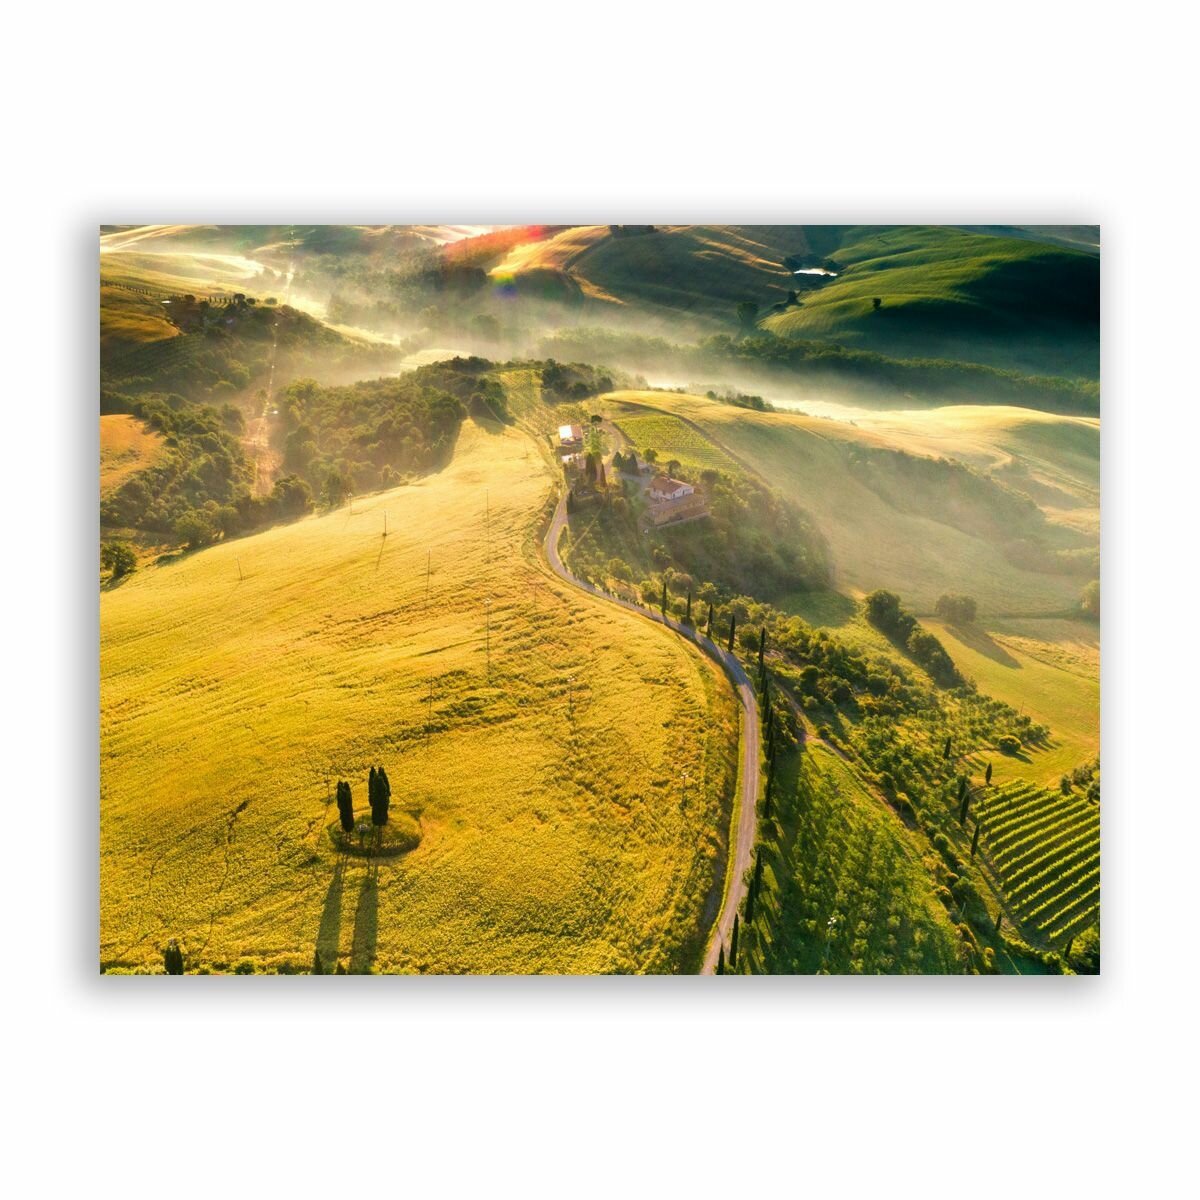 Постер, плакат на бумаге / Природа Италии - Тоскана / Размер 30 x 40 см